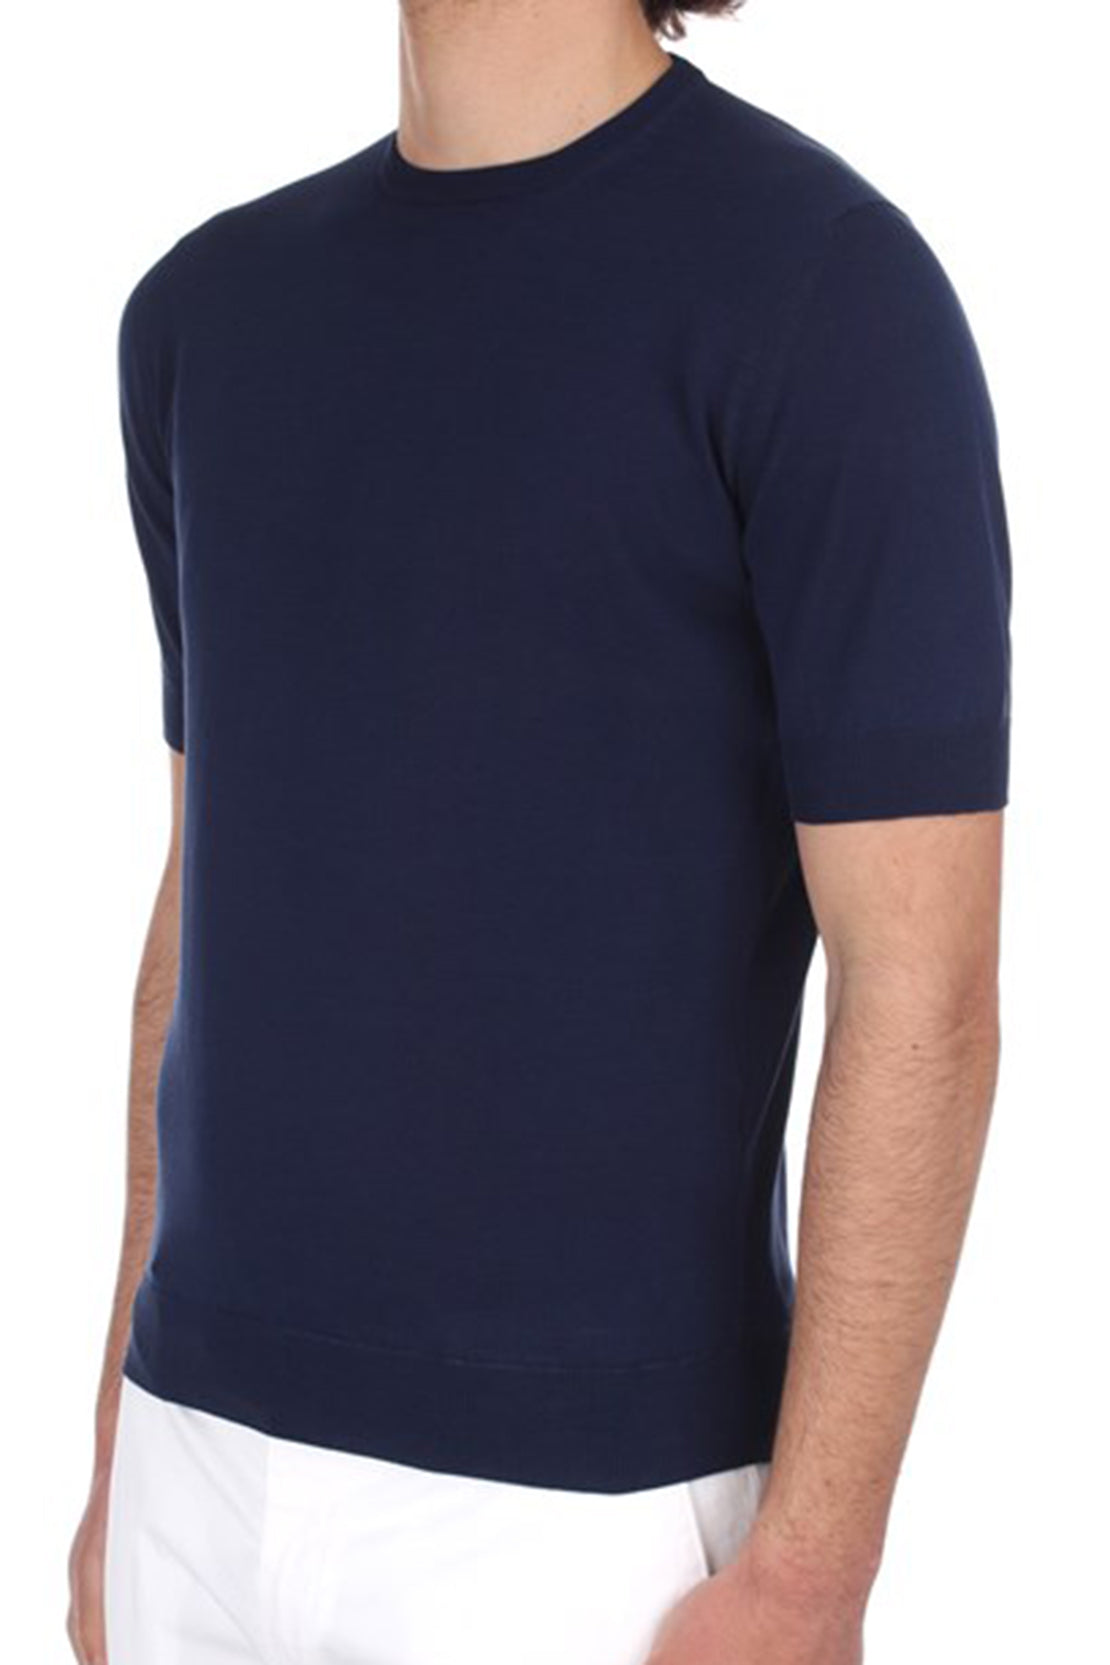 FILIPPO DE LAURENTIIS - Dark Blue Lightweight Crepe Cotton Short Sleeve Knitted T-Shirt